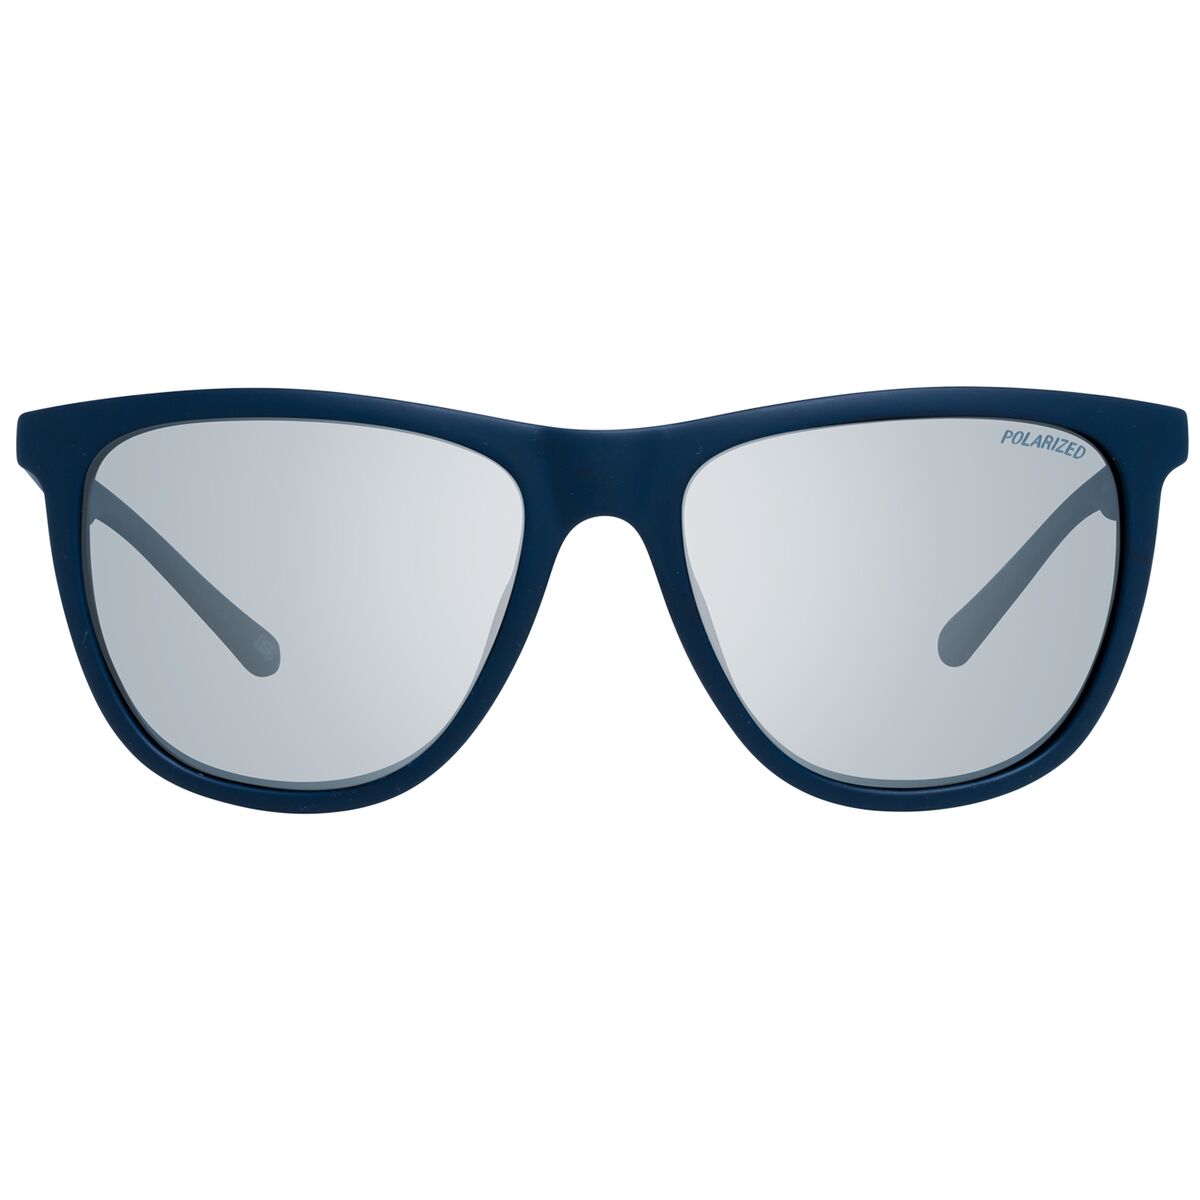 Unisex Sunglasses Skechers ø 57 mm